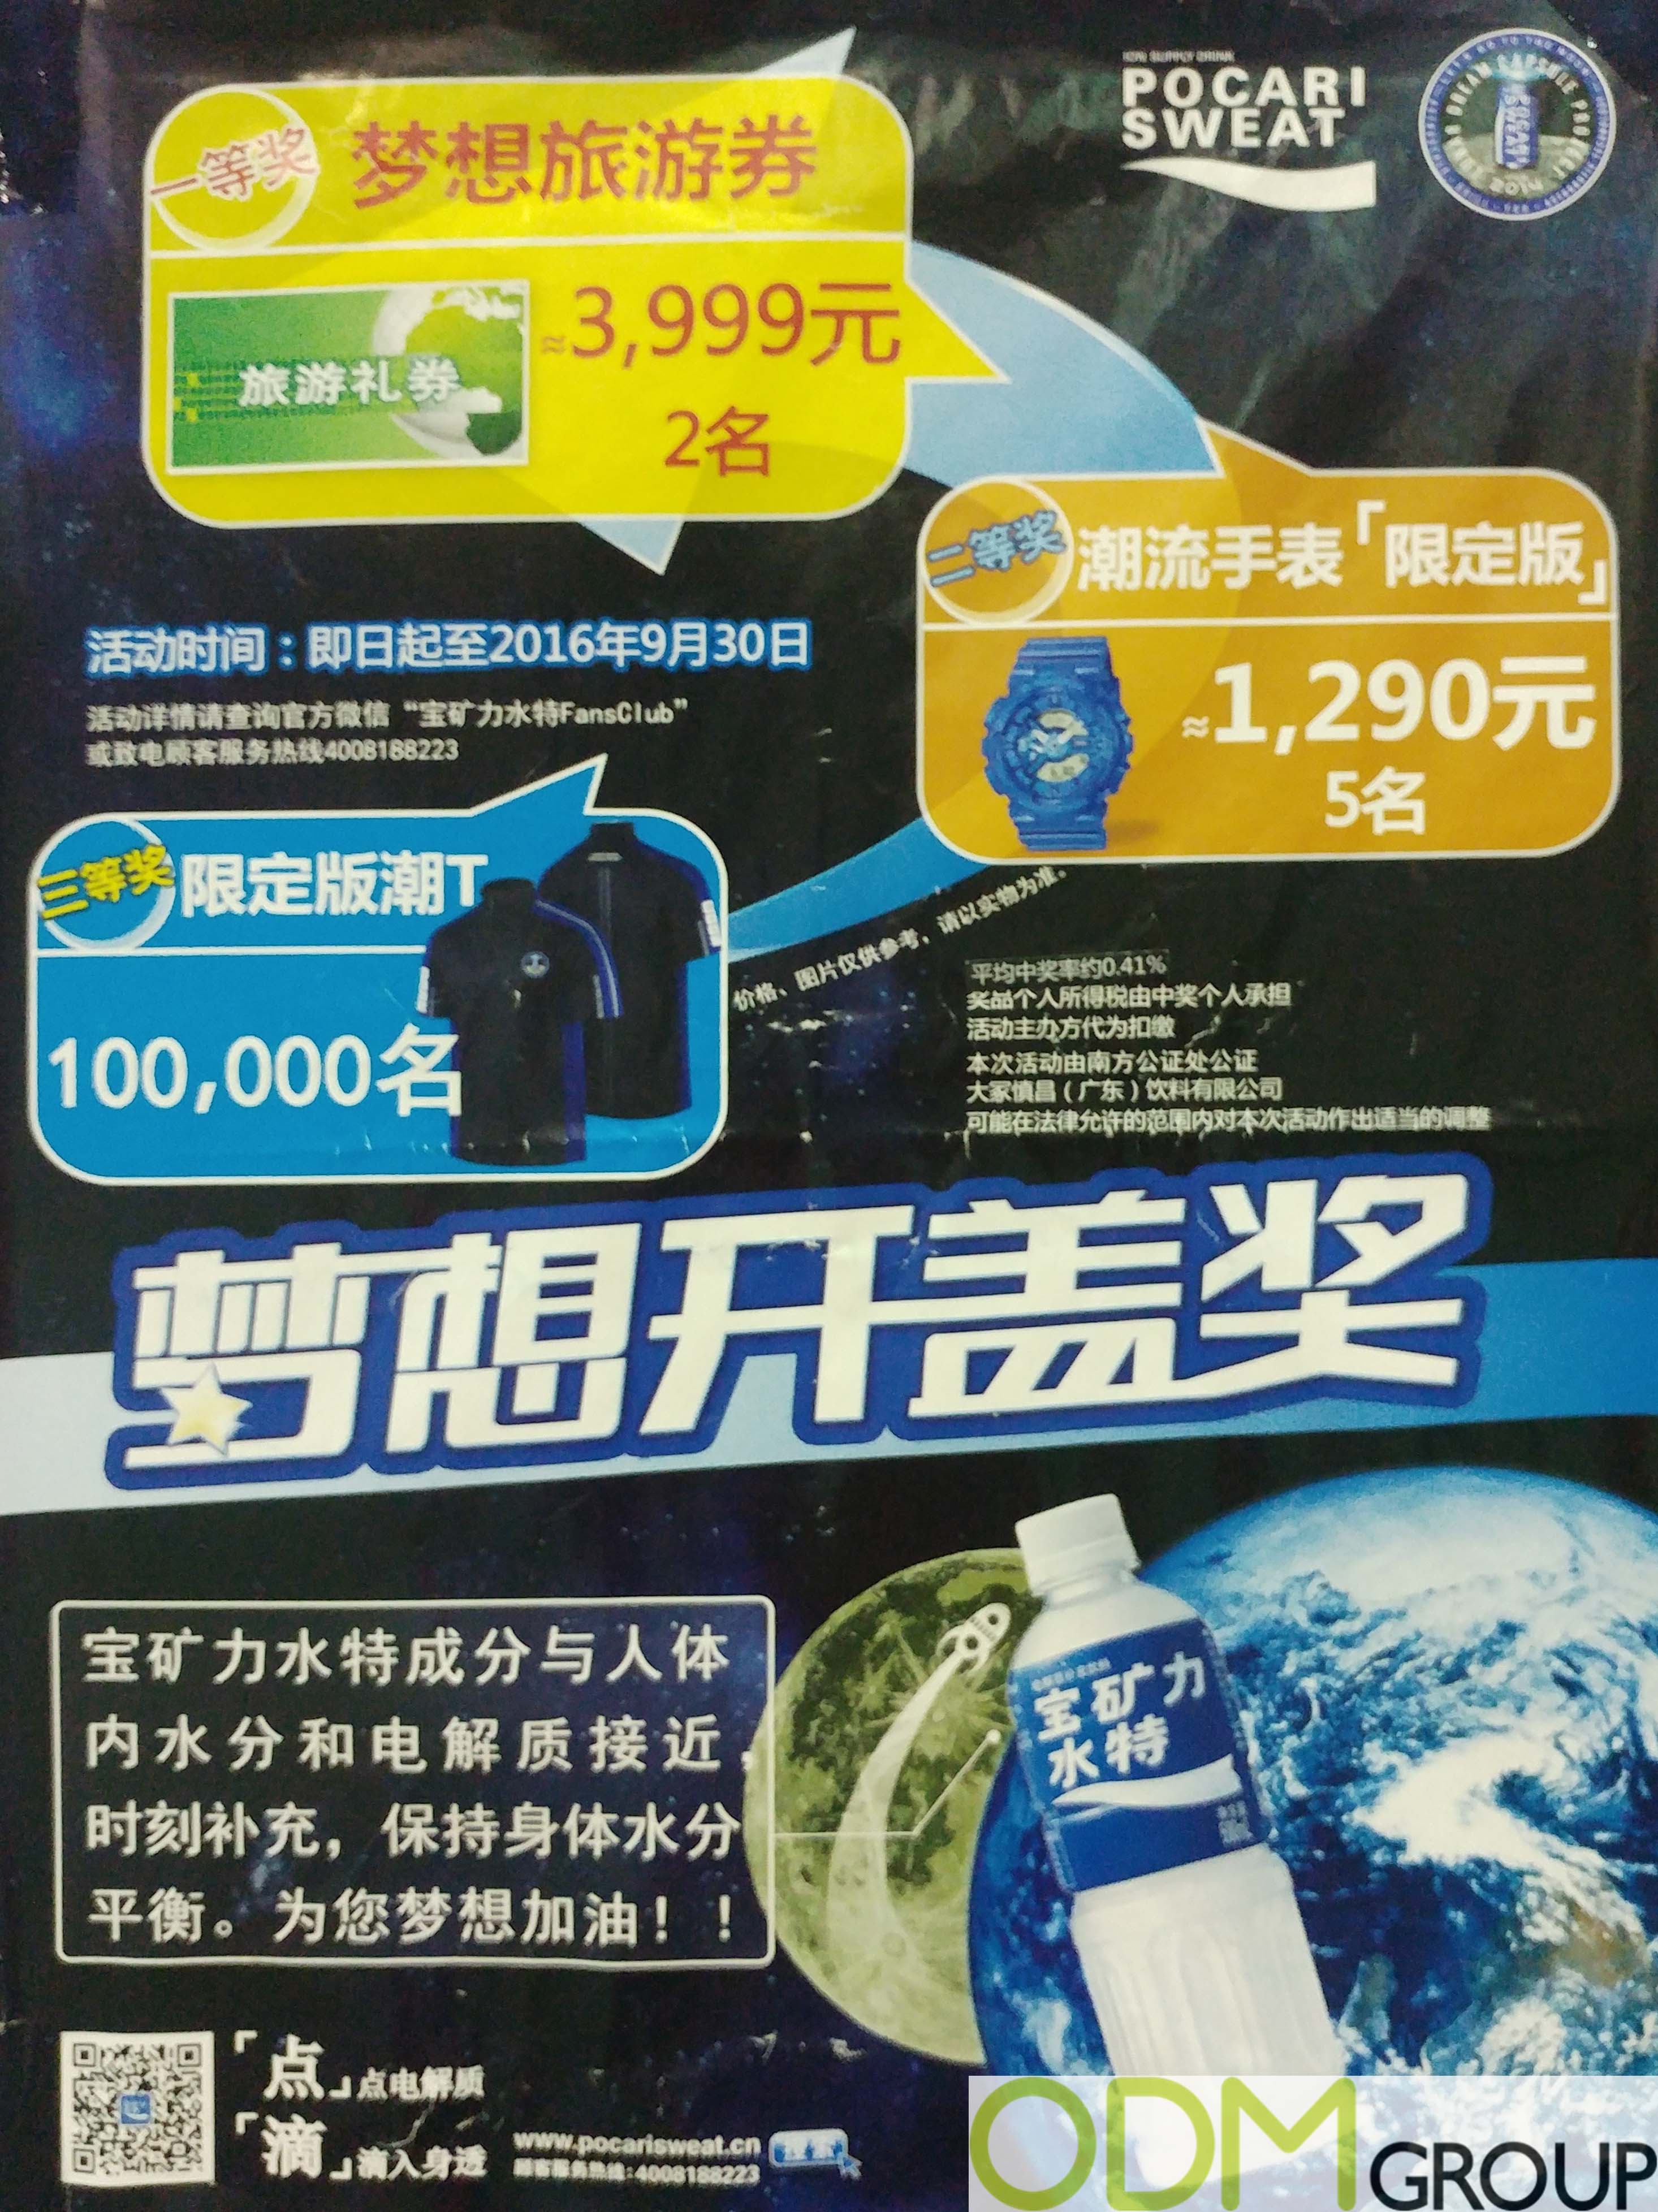 Pocari Marketing Promotion - 100,000 Shirts in China